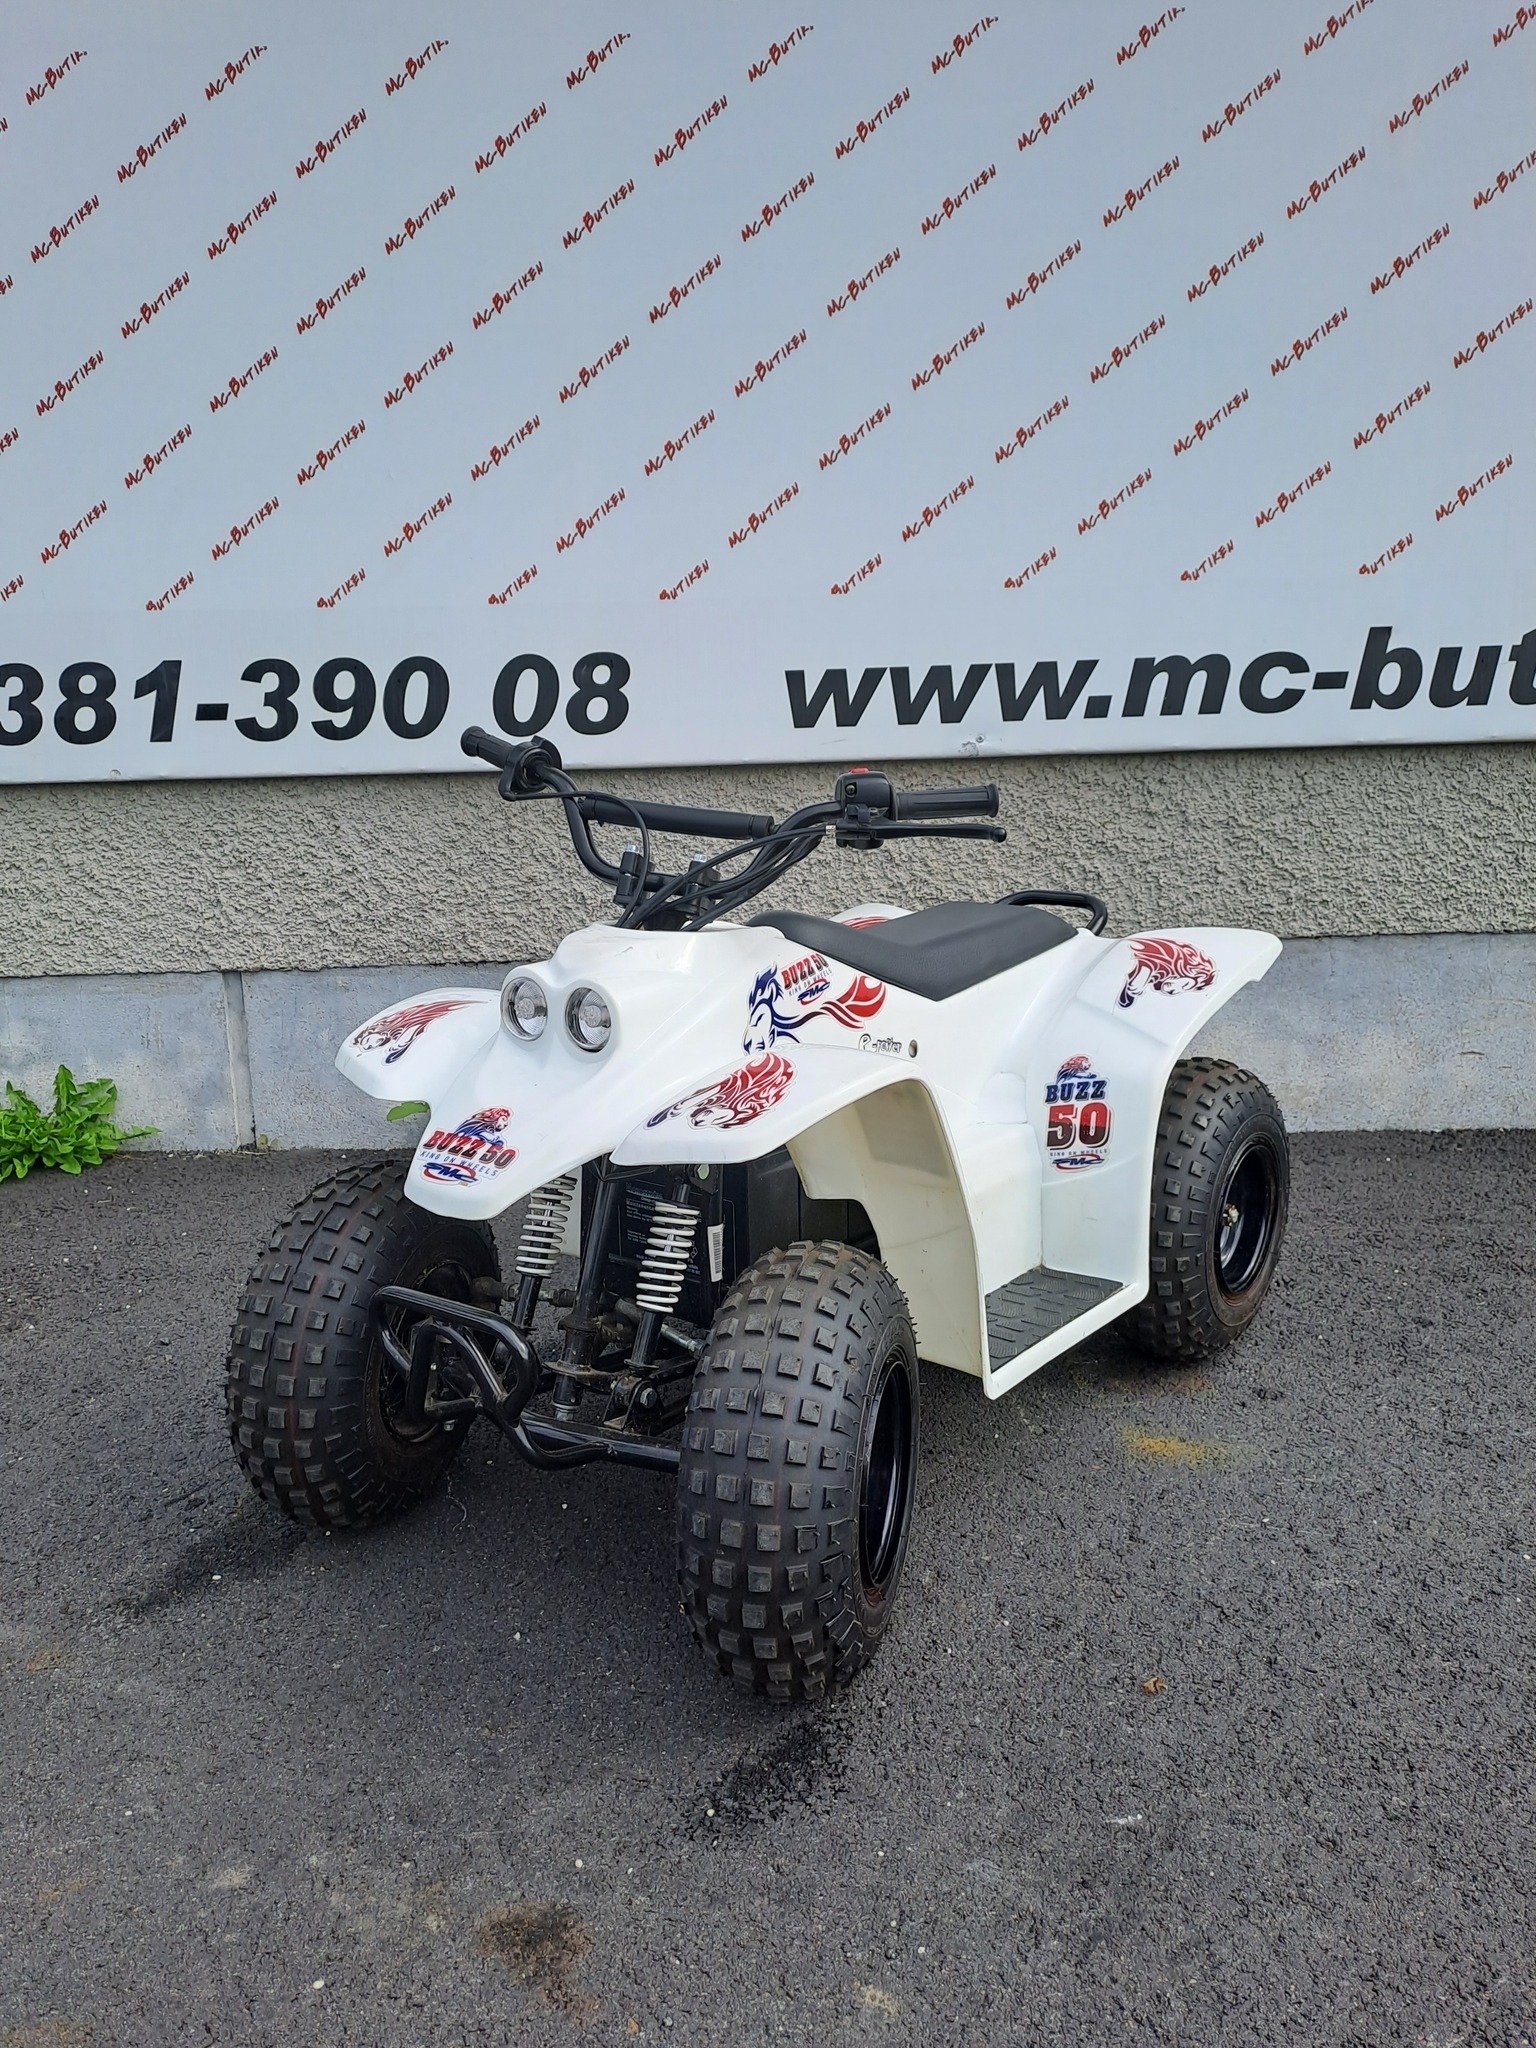 Barnfyrhjuling SMC buzz 50 el (SÅLD)